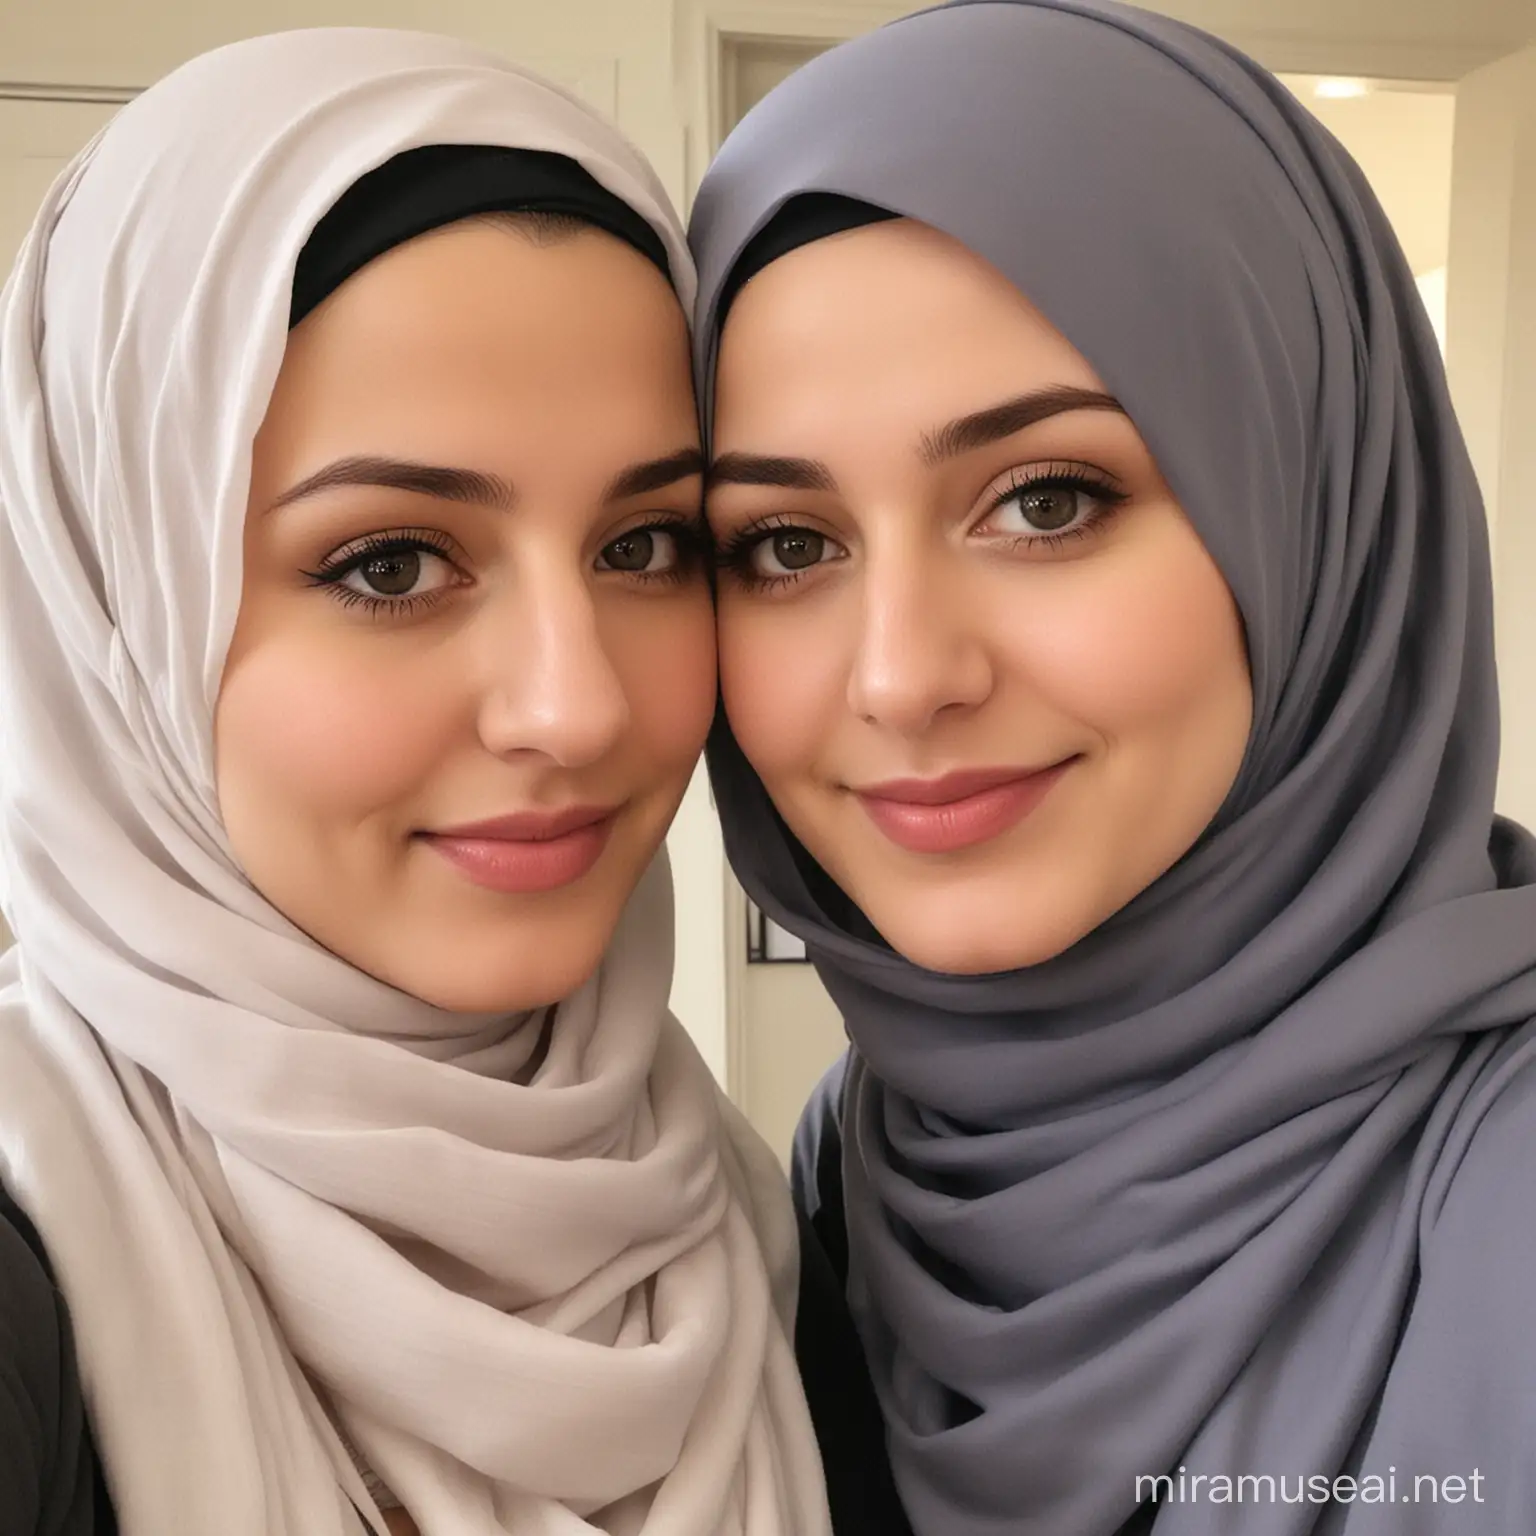 Two Iranian Hijabi Girls Exploring Identity and Diversity